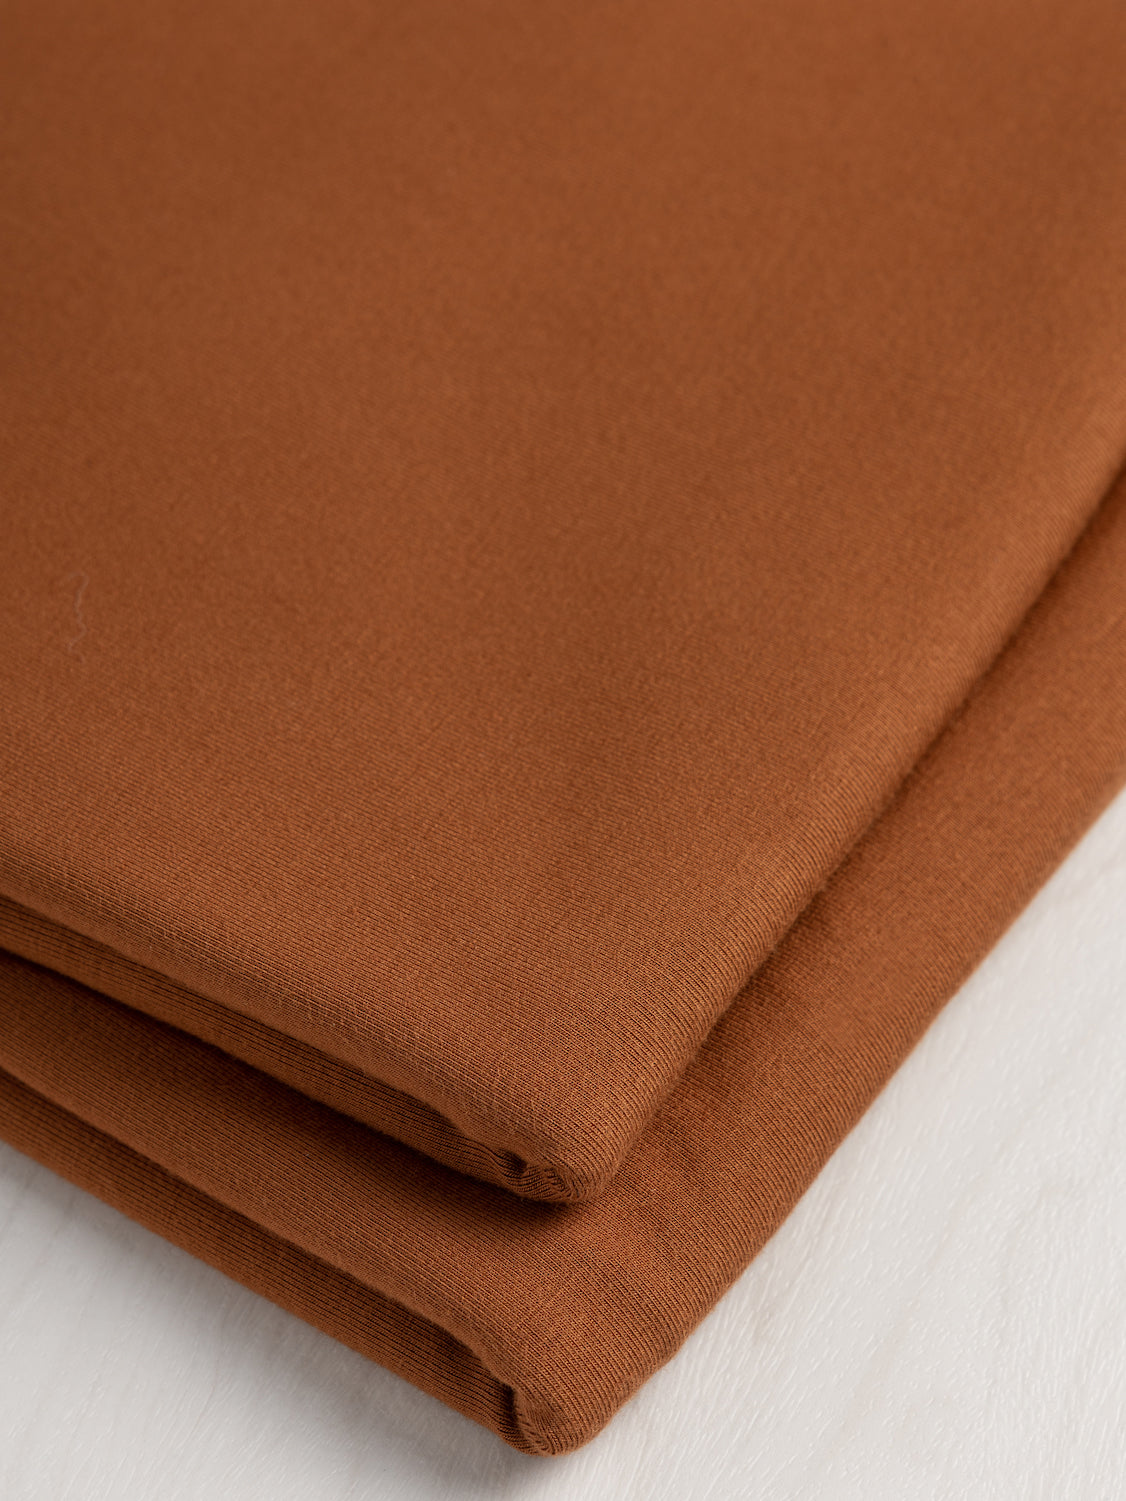 Stretch Bamboo Jersey - Copper | Core Fabrics